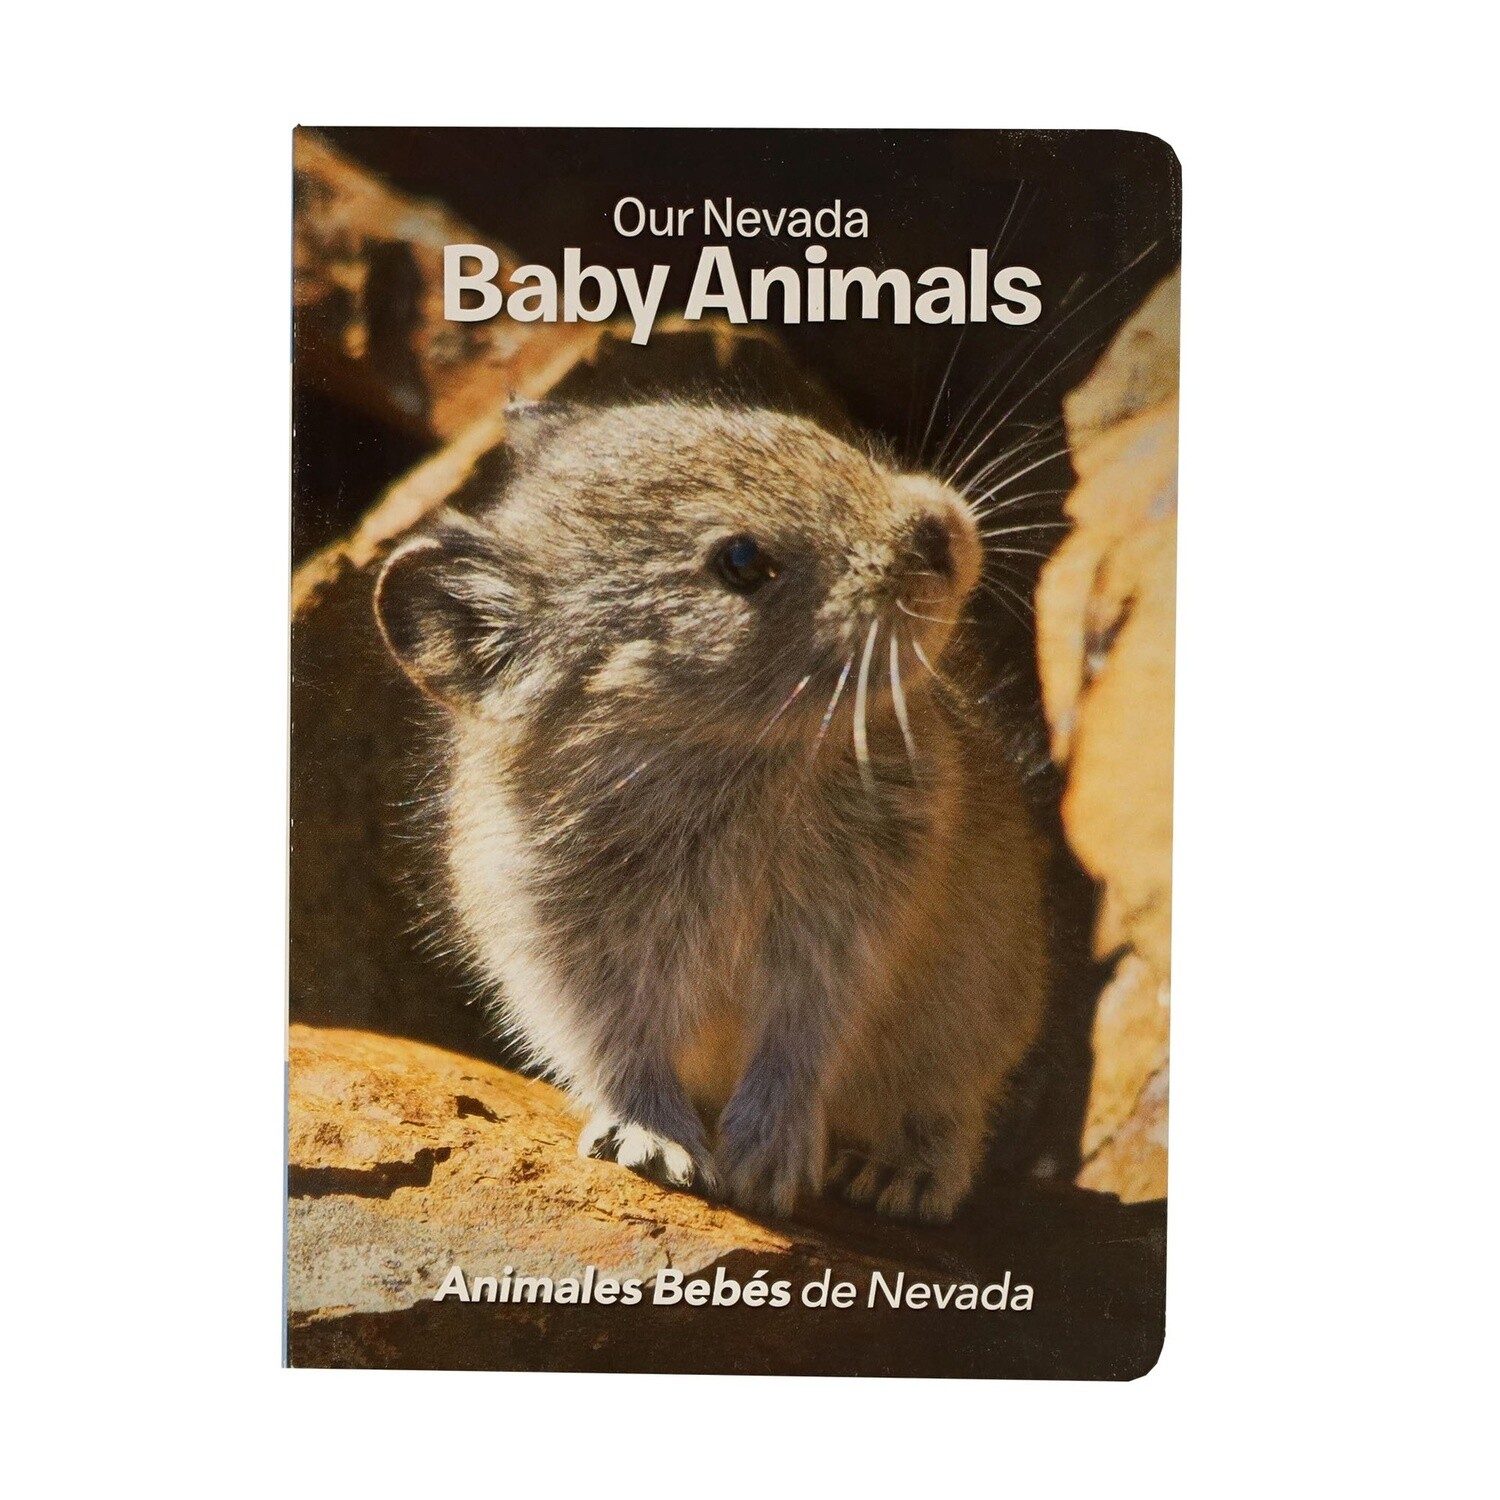 Our Nevada Baby Animals by Jerri Conrad